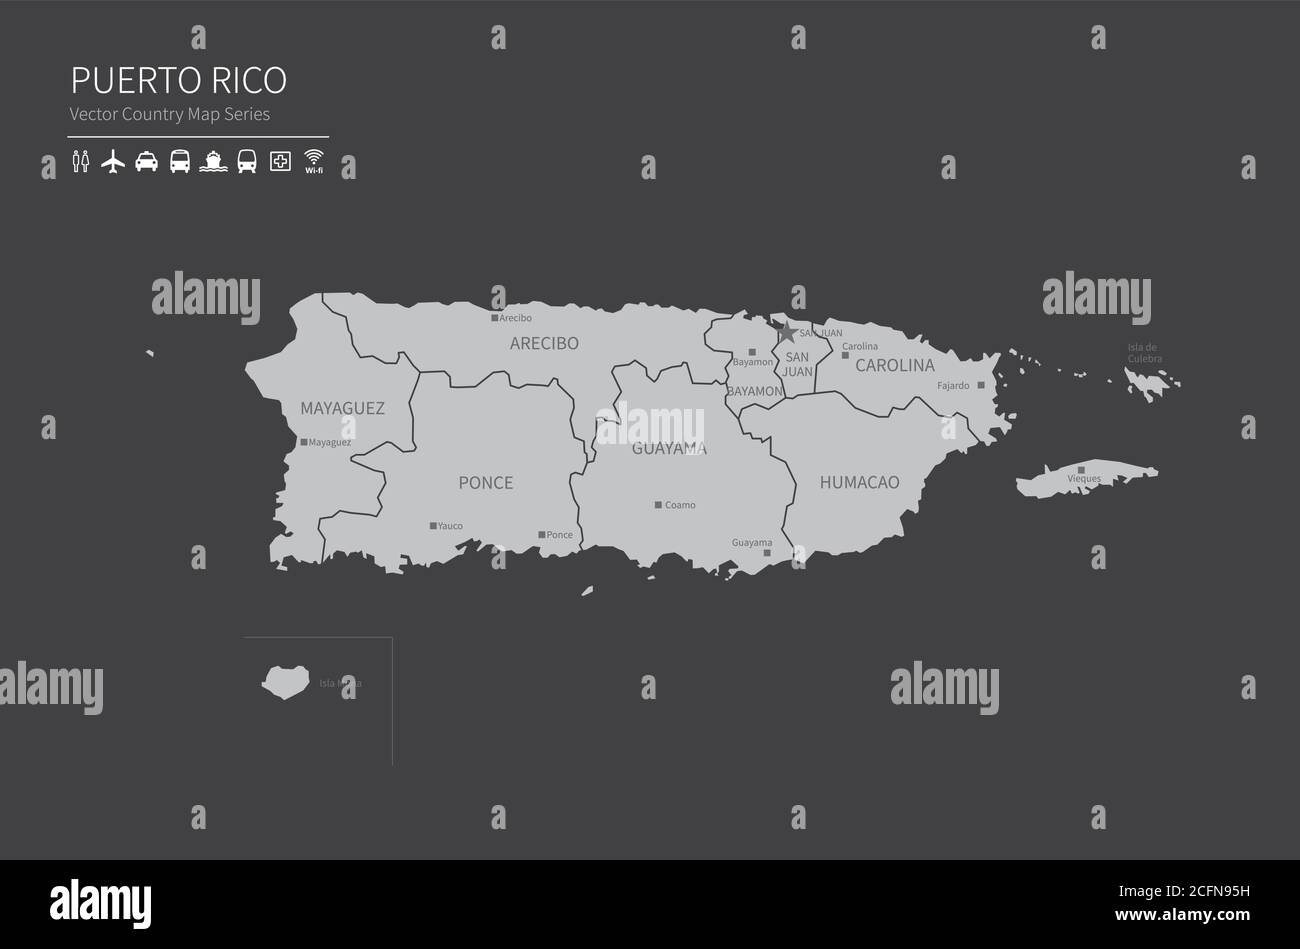 Mapa De Puerto Rico Mapa Nacional Del Mundo Serie De Mapas De Paises De Color Gris Imagen Vector De Stock Alamy